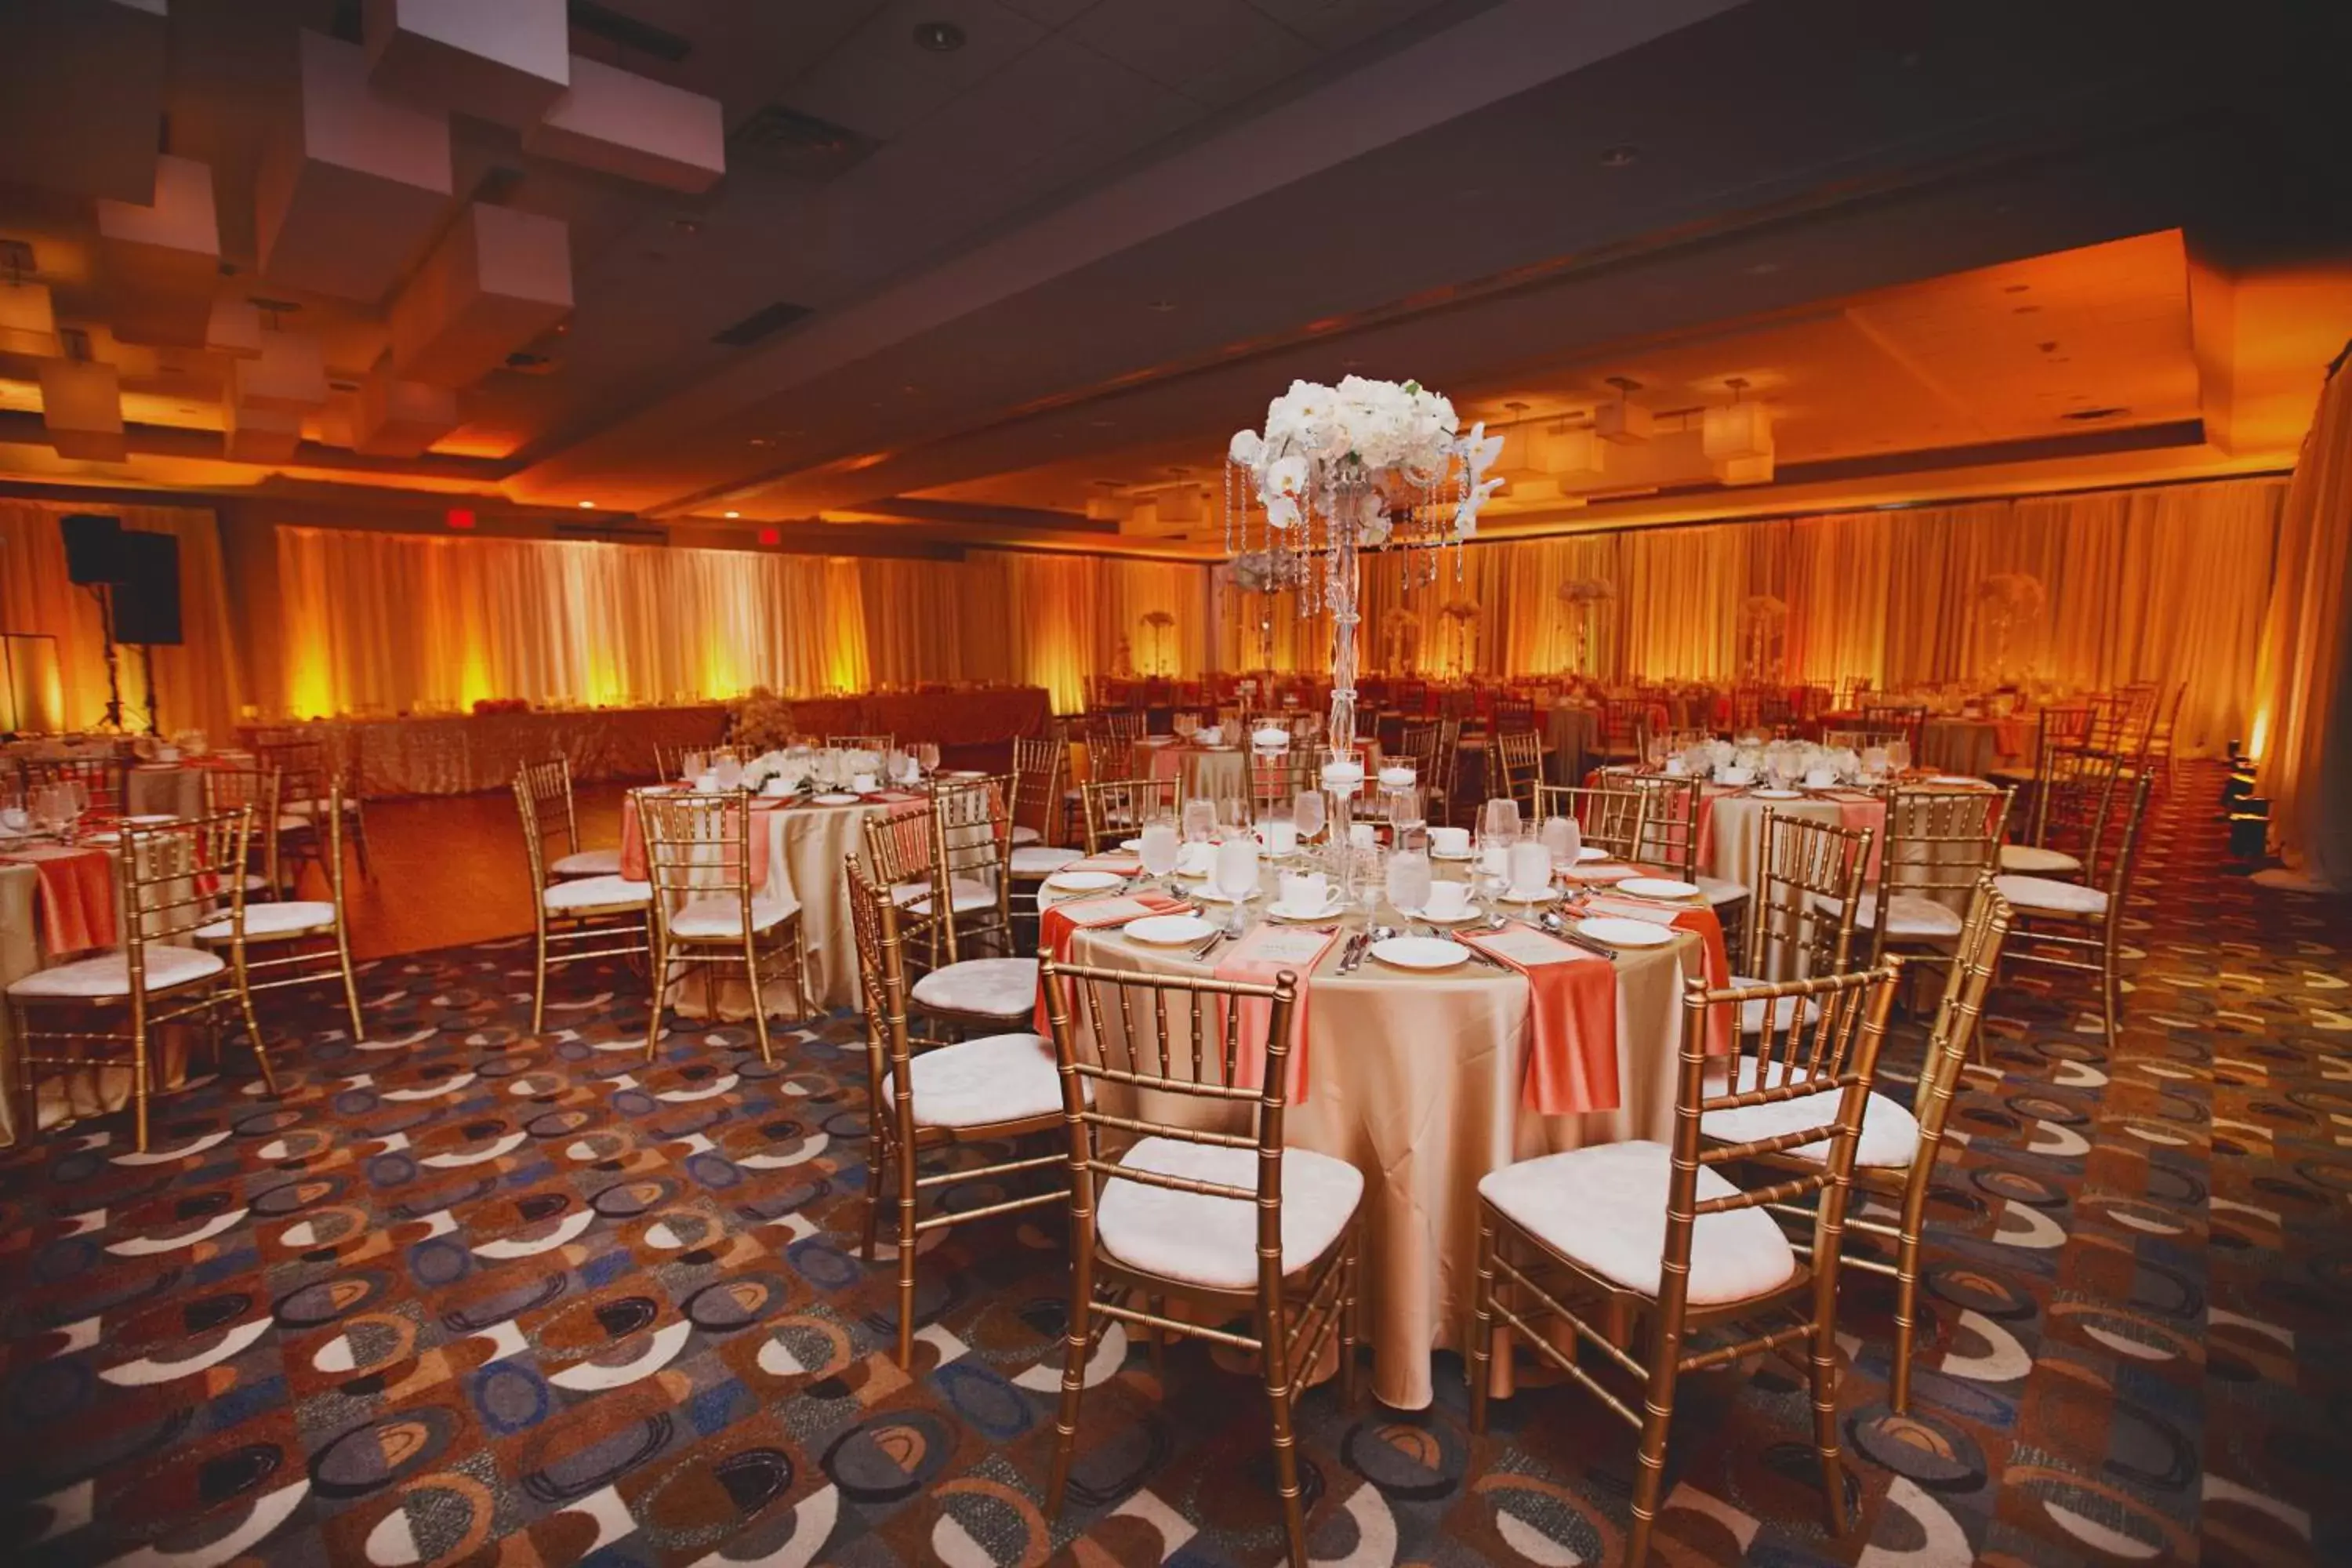 Banquet/Function facilities, Banquet Facilities in Matrix Hotel